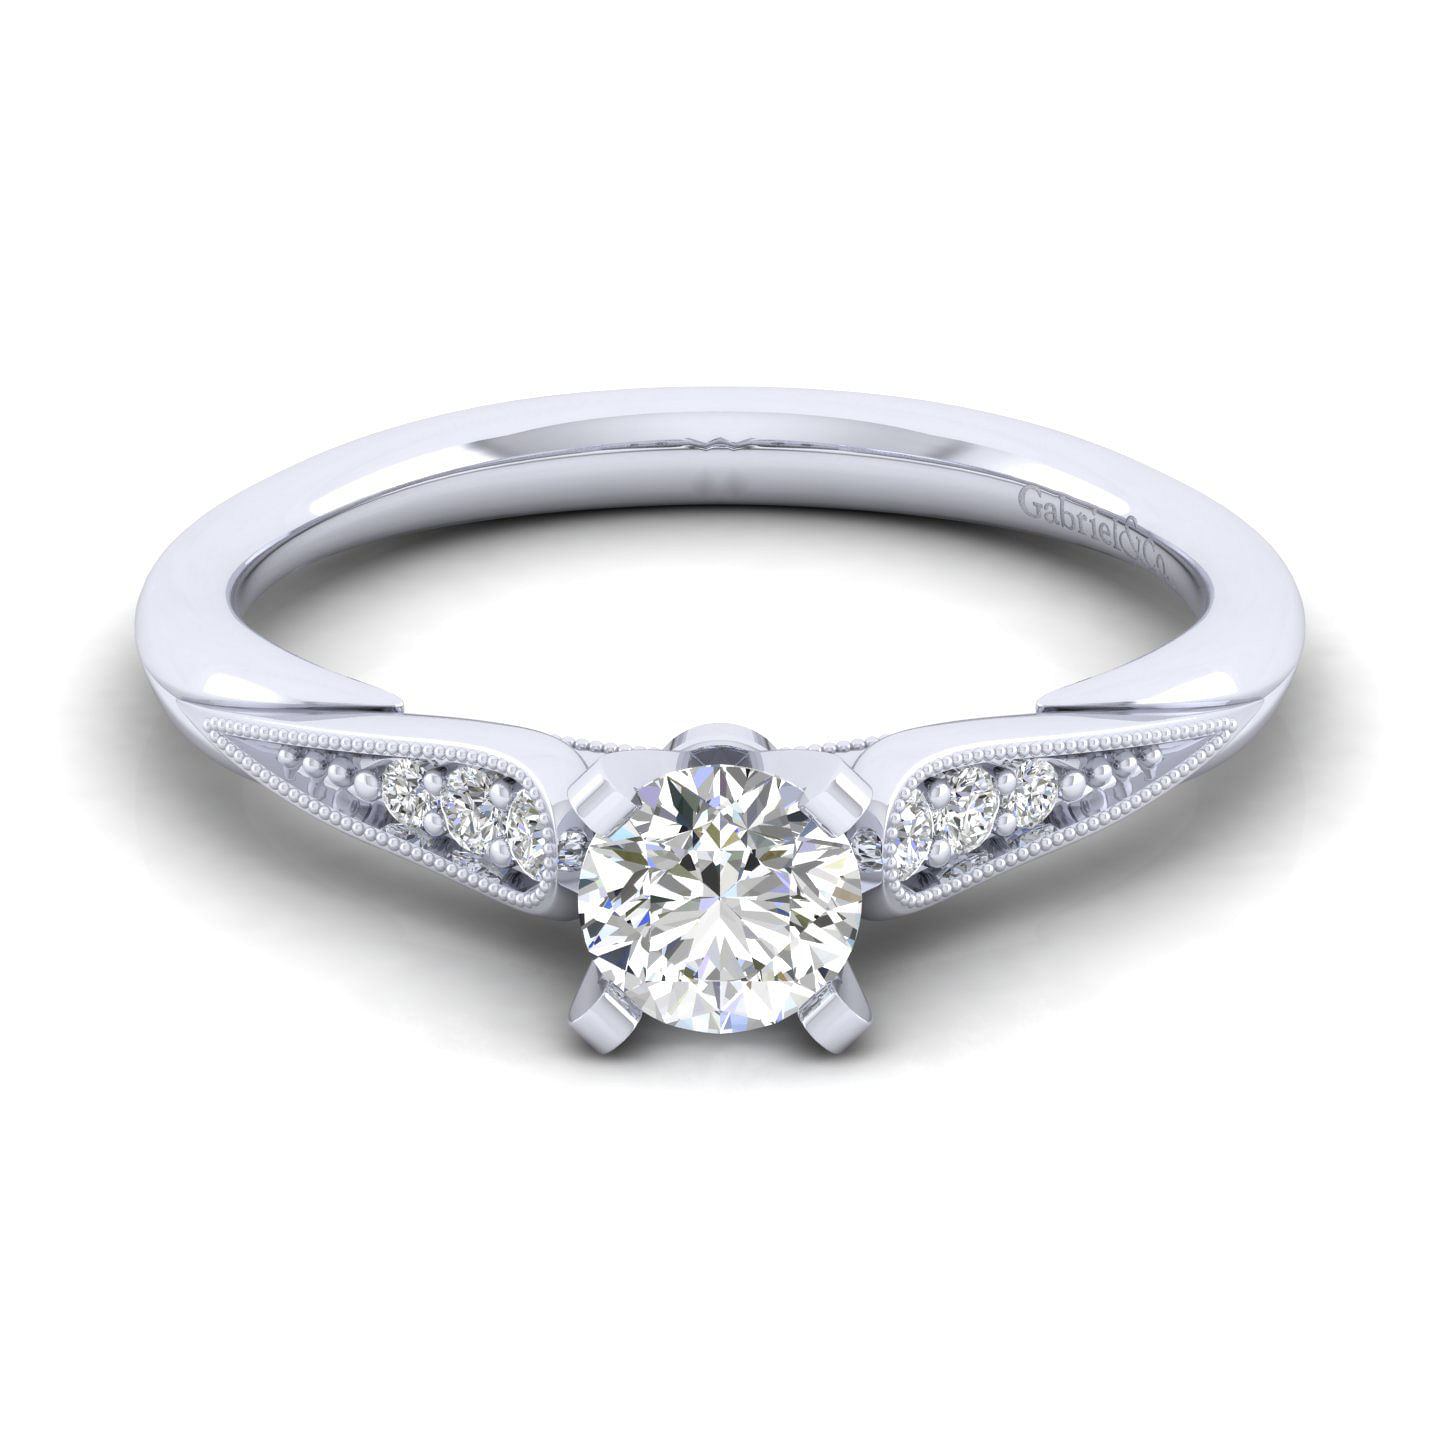 Riley - 14K White Gold Round Diamond Engagement Ring